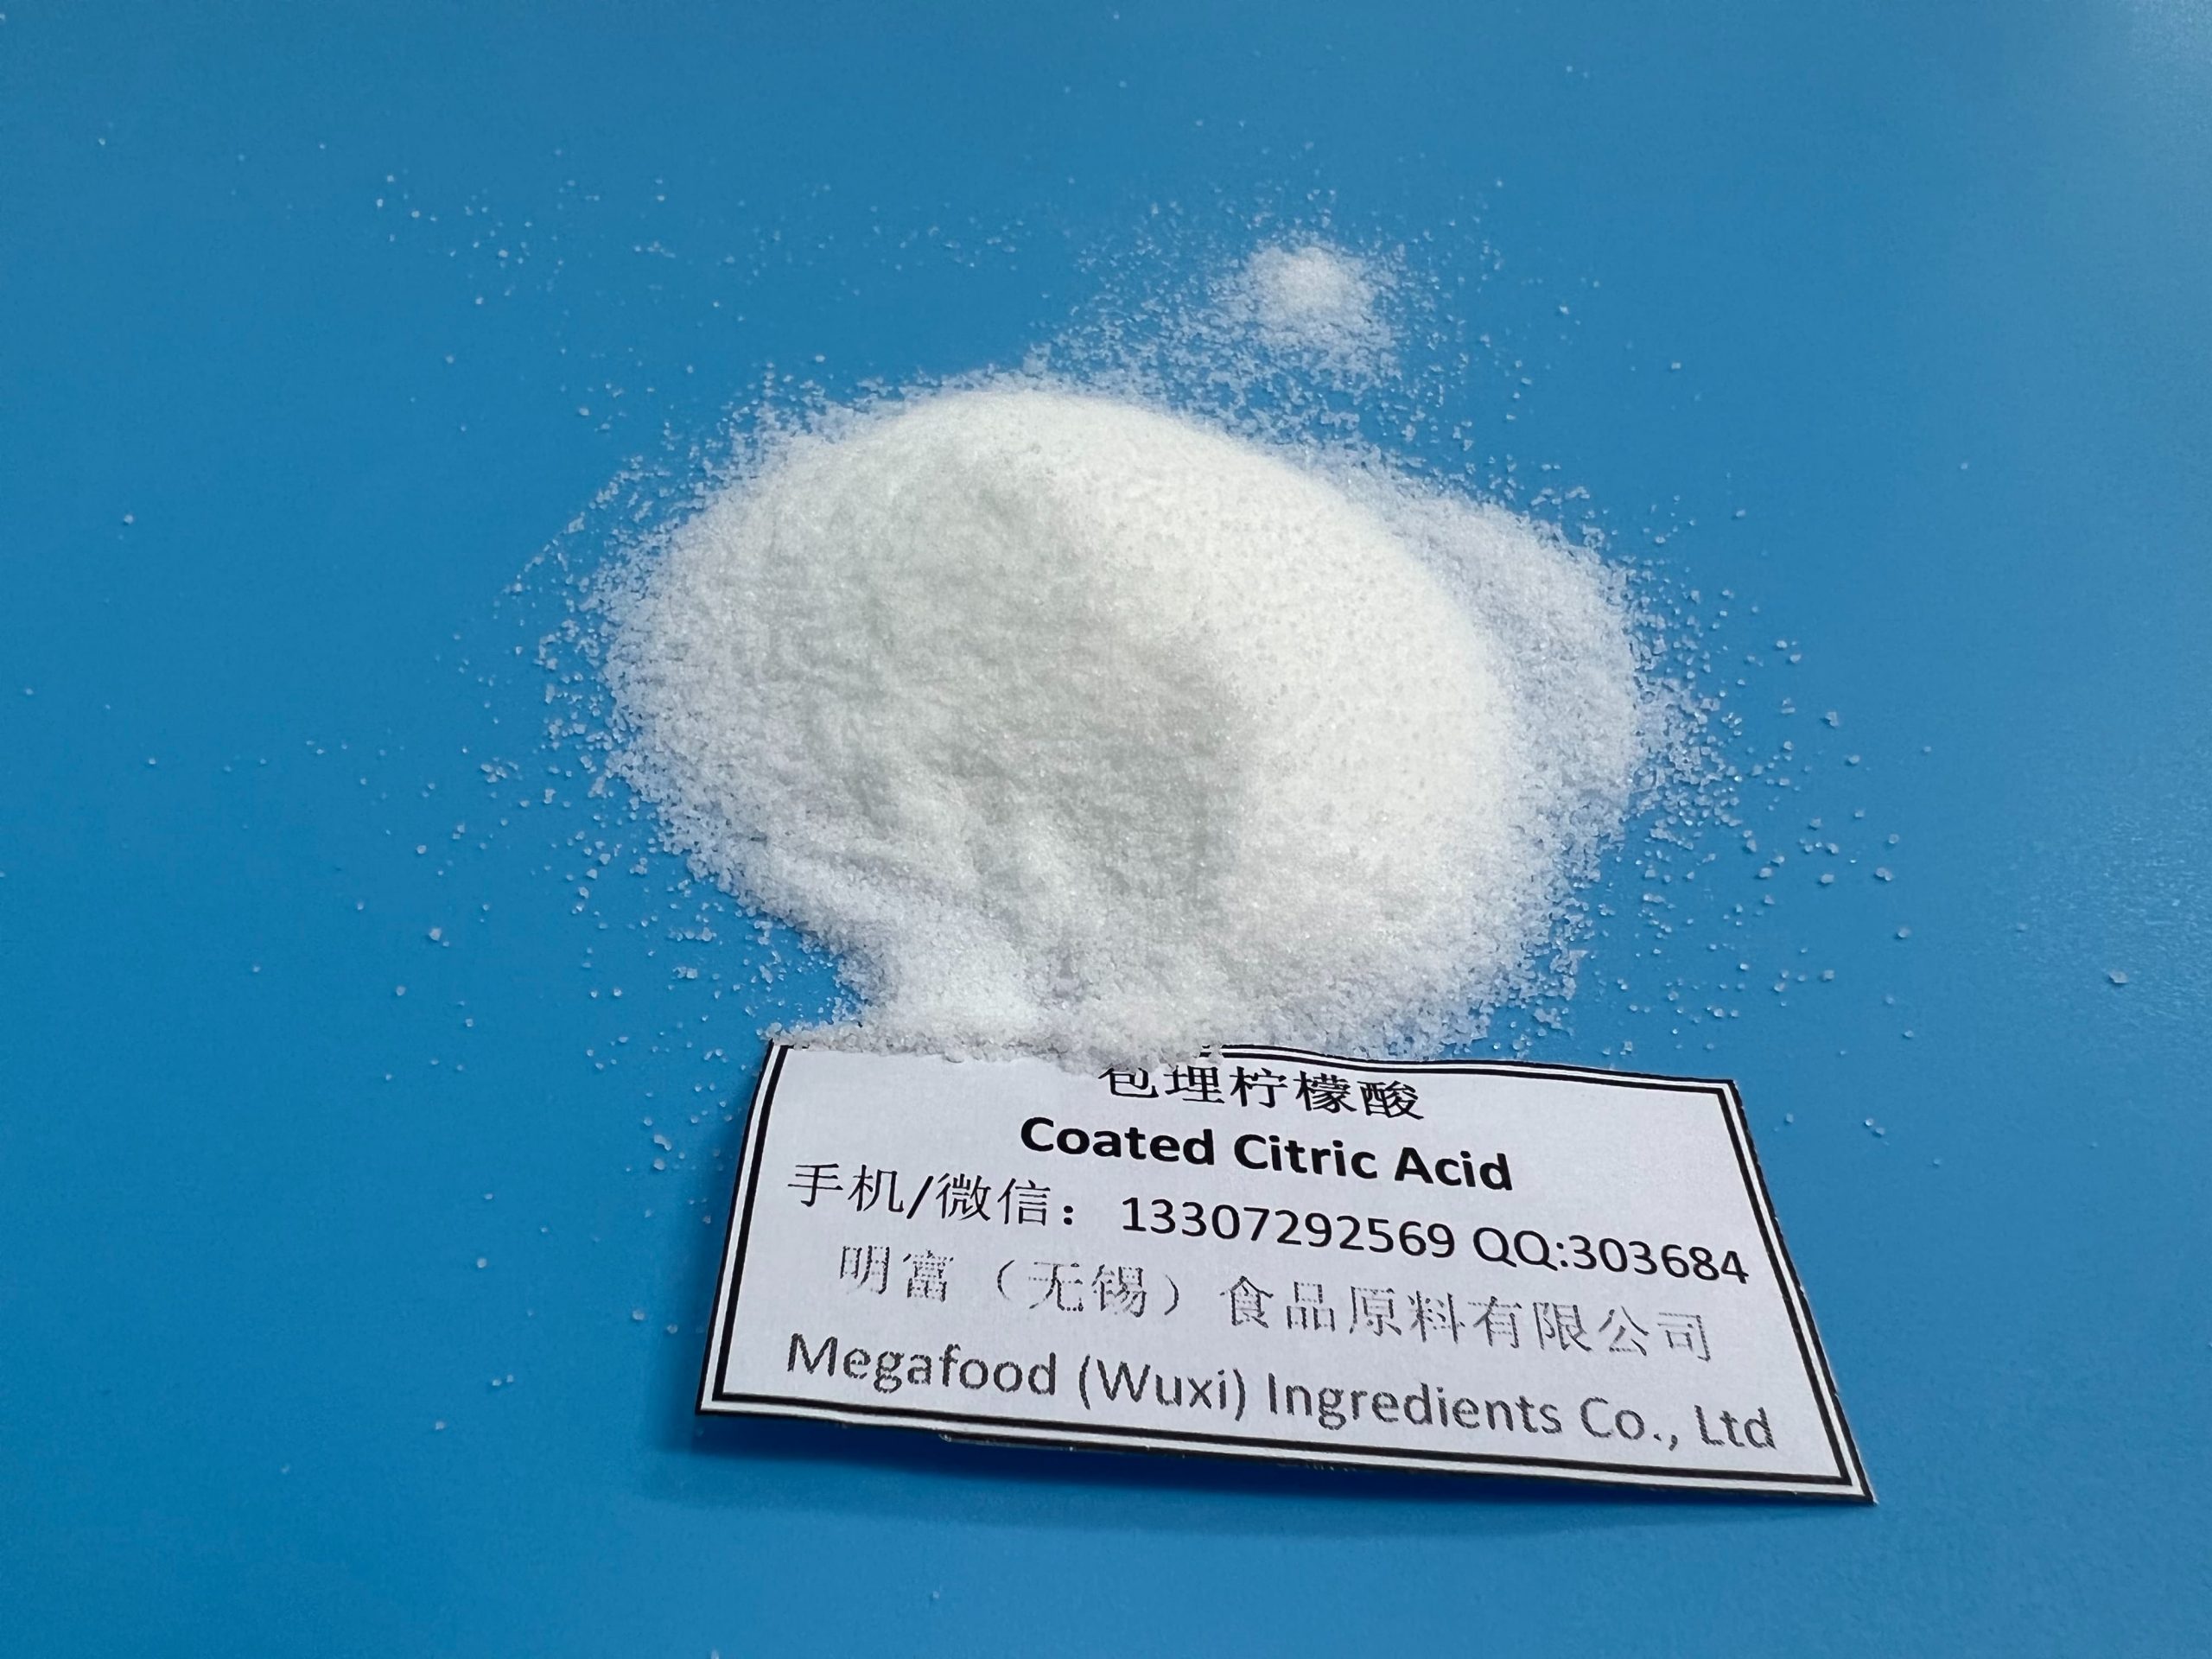 Encapsuled or Coated Citric Acid at Good Price